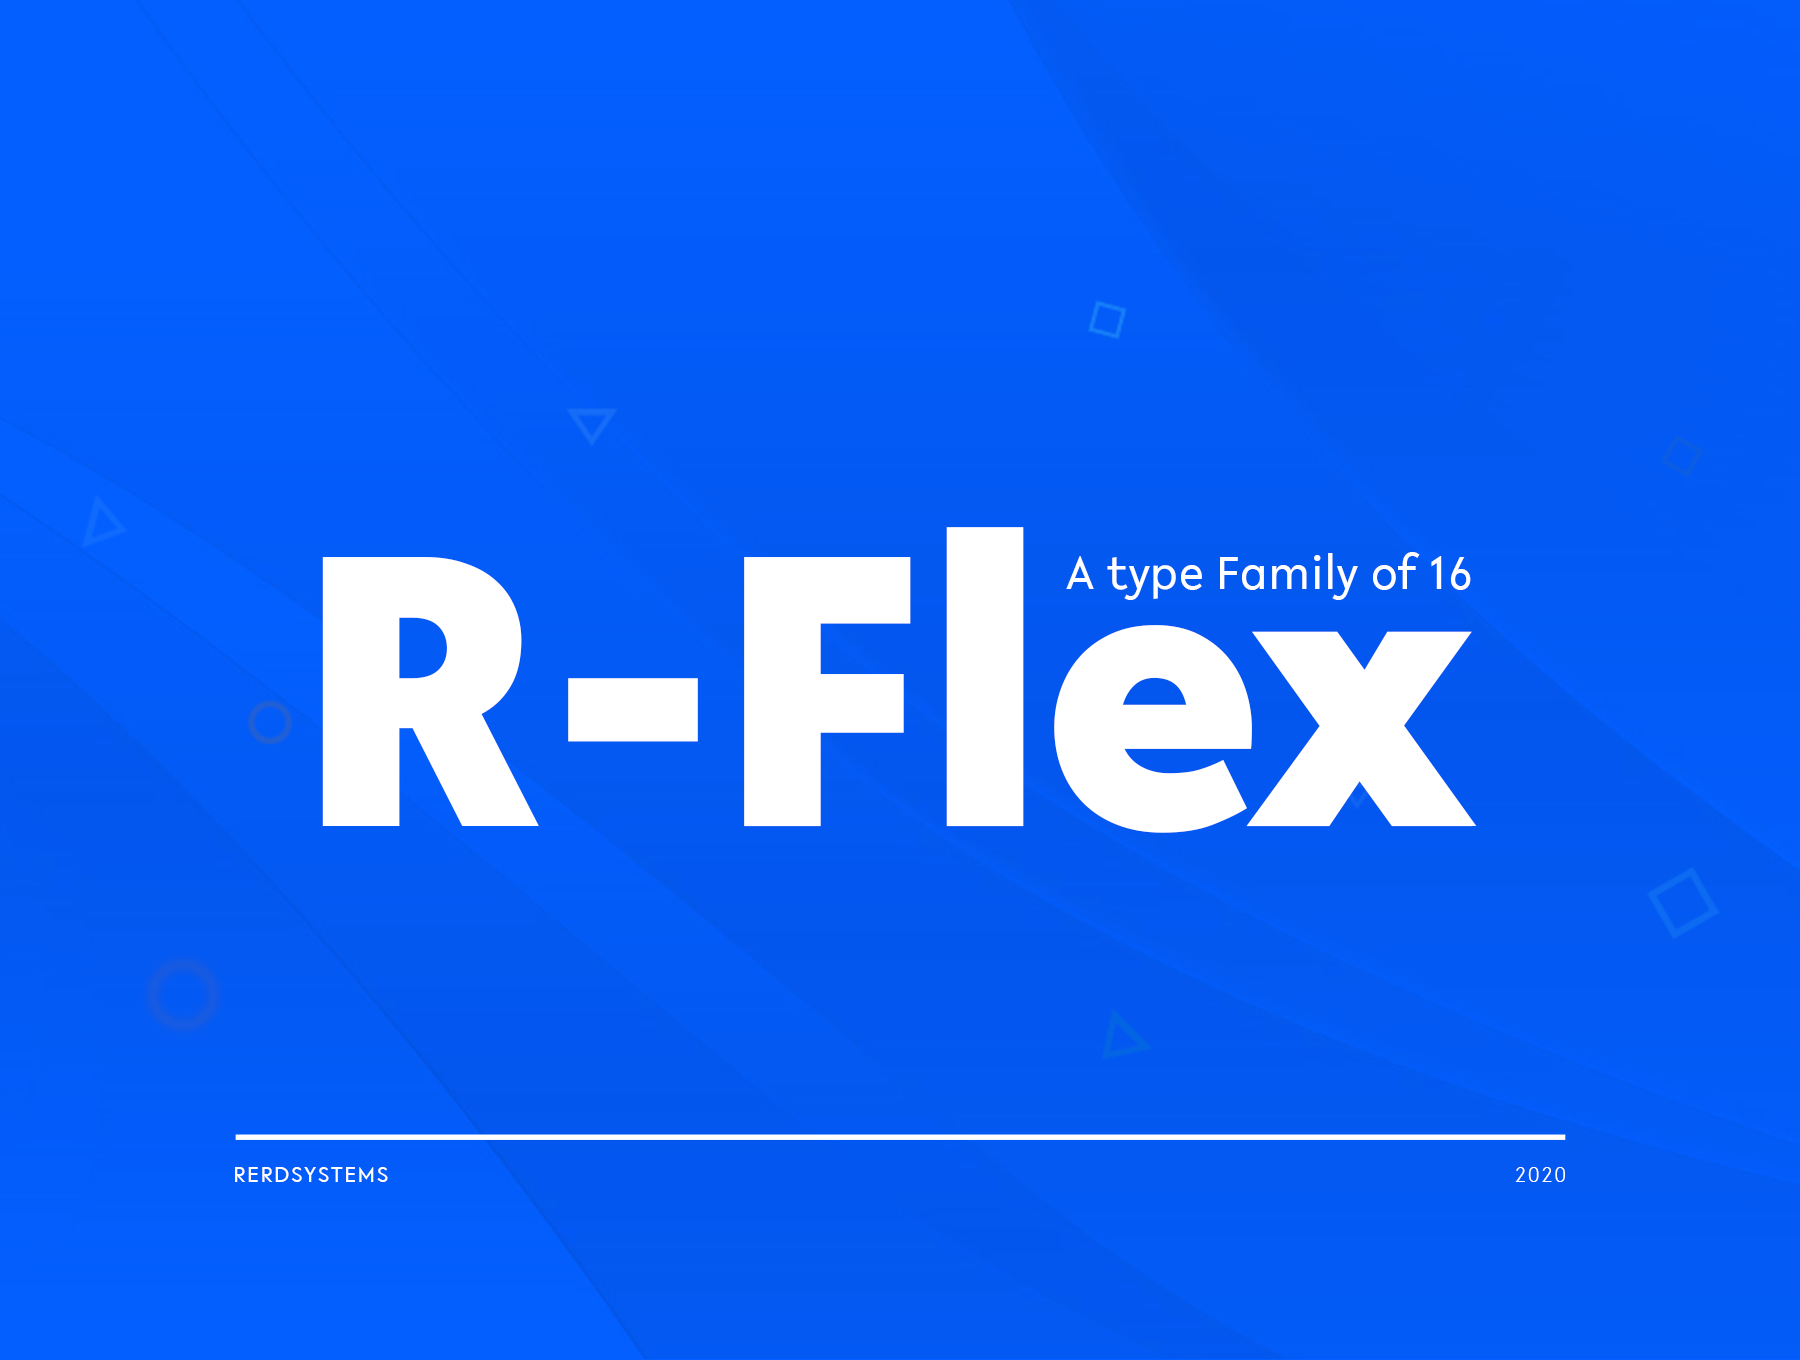 R-Flex Bold font